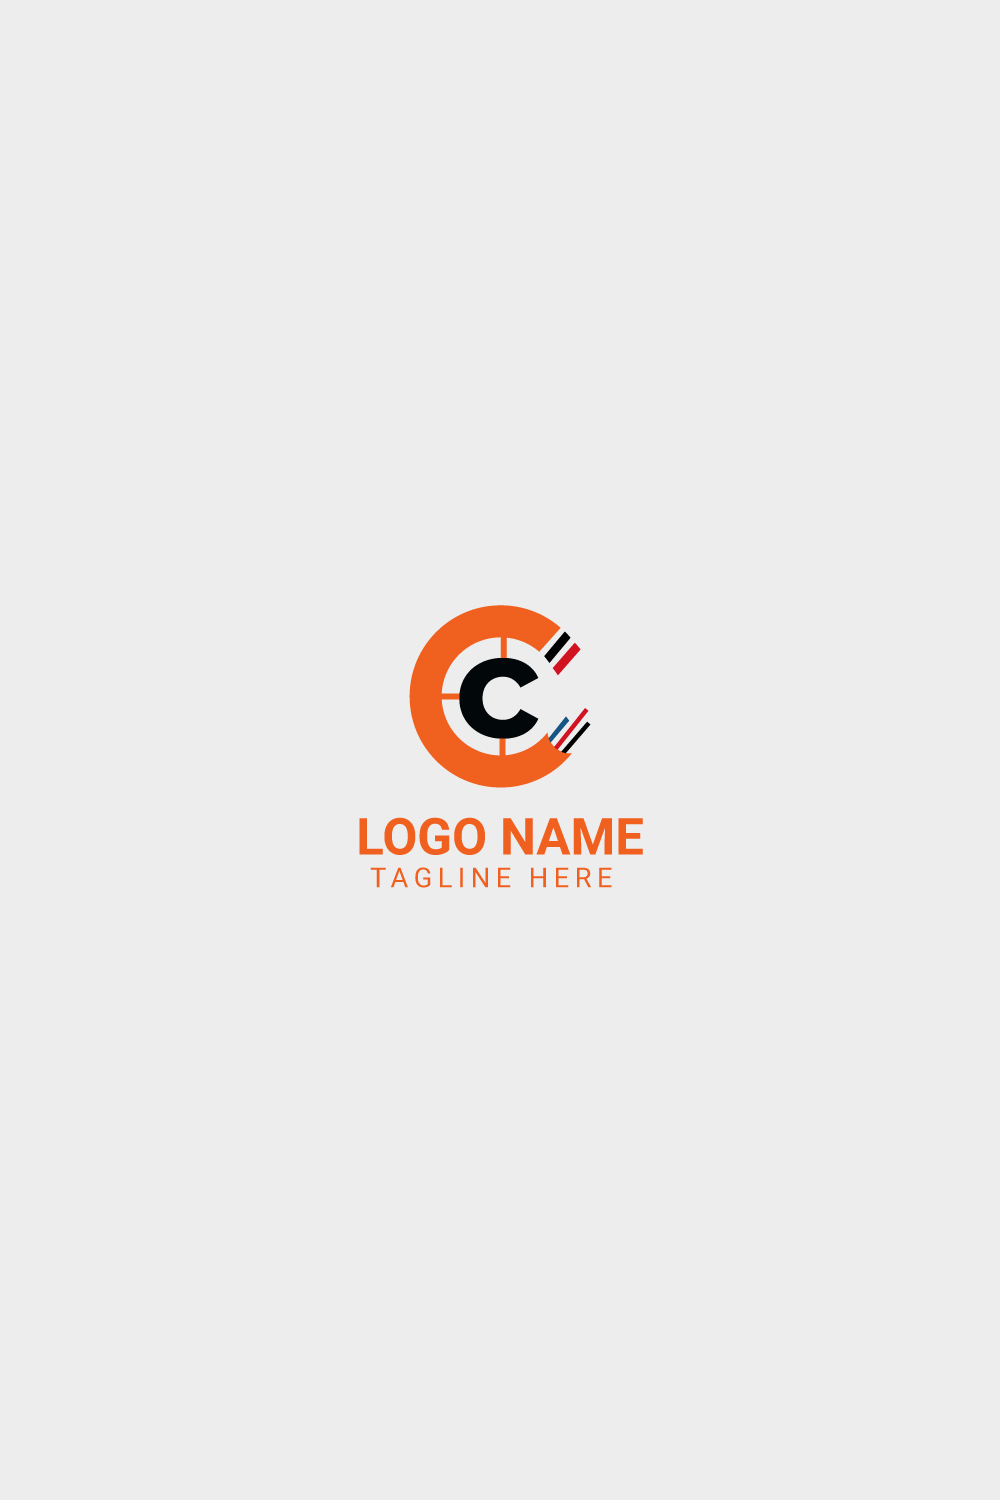 c Letter logo design pinterest preview image.